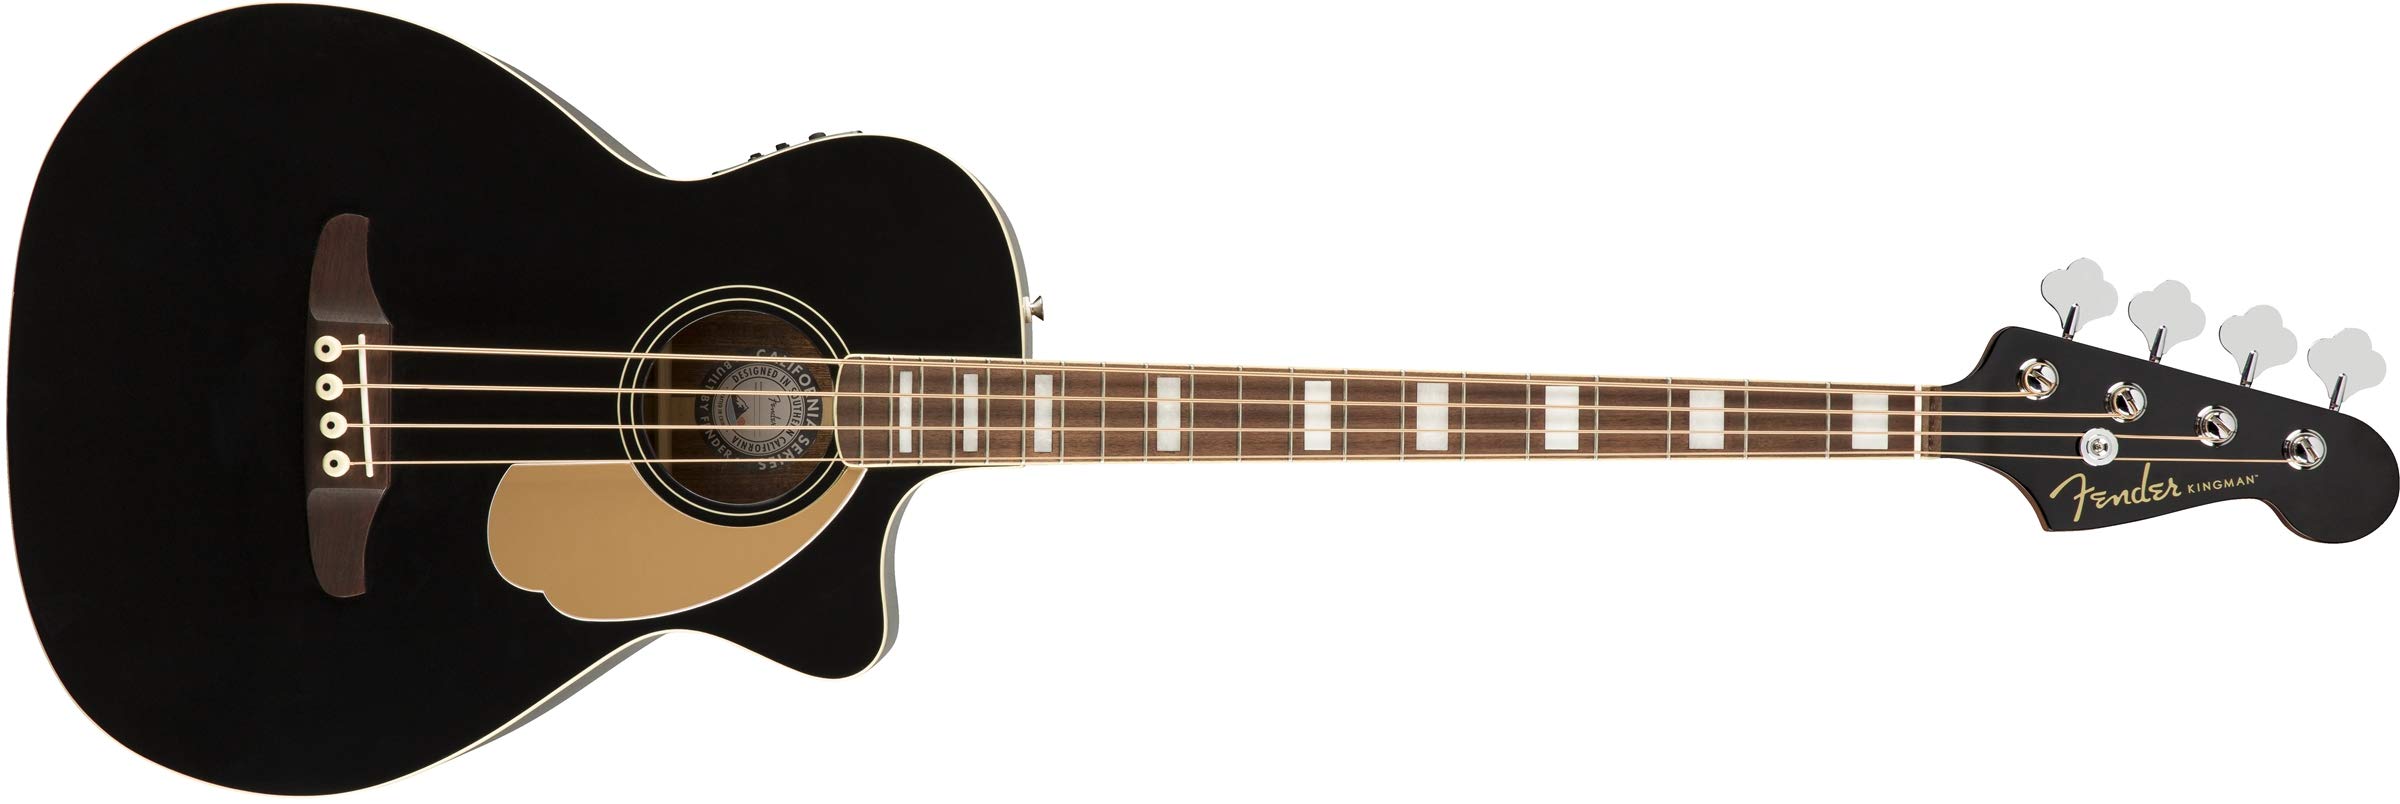 Fender Kingman Acoustic Bass Guitar (V2) - Black - with...